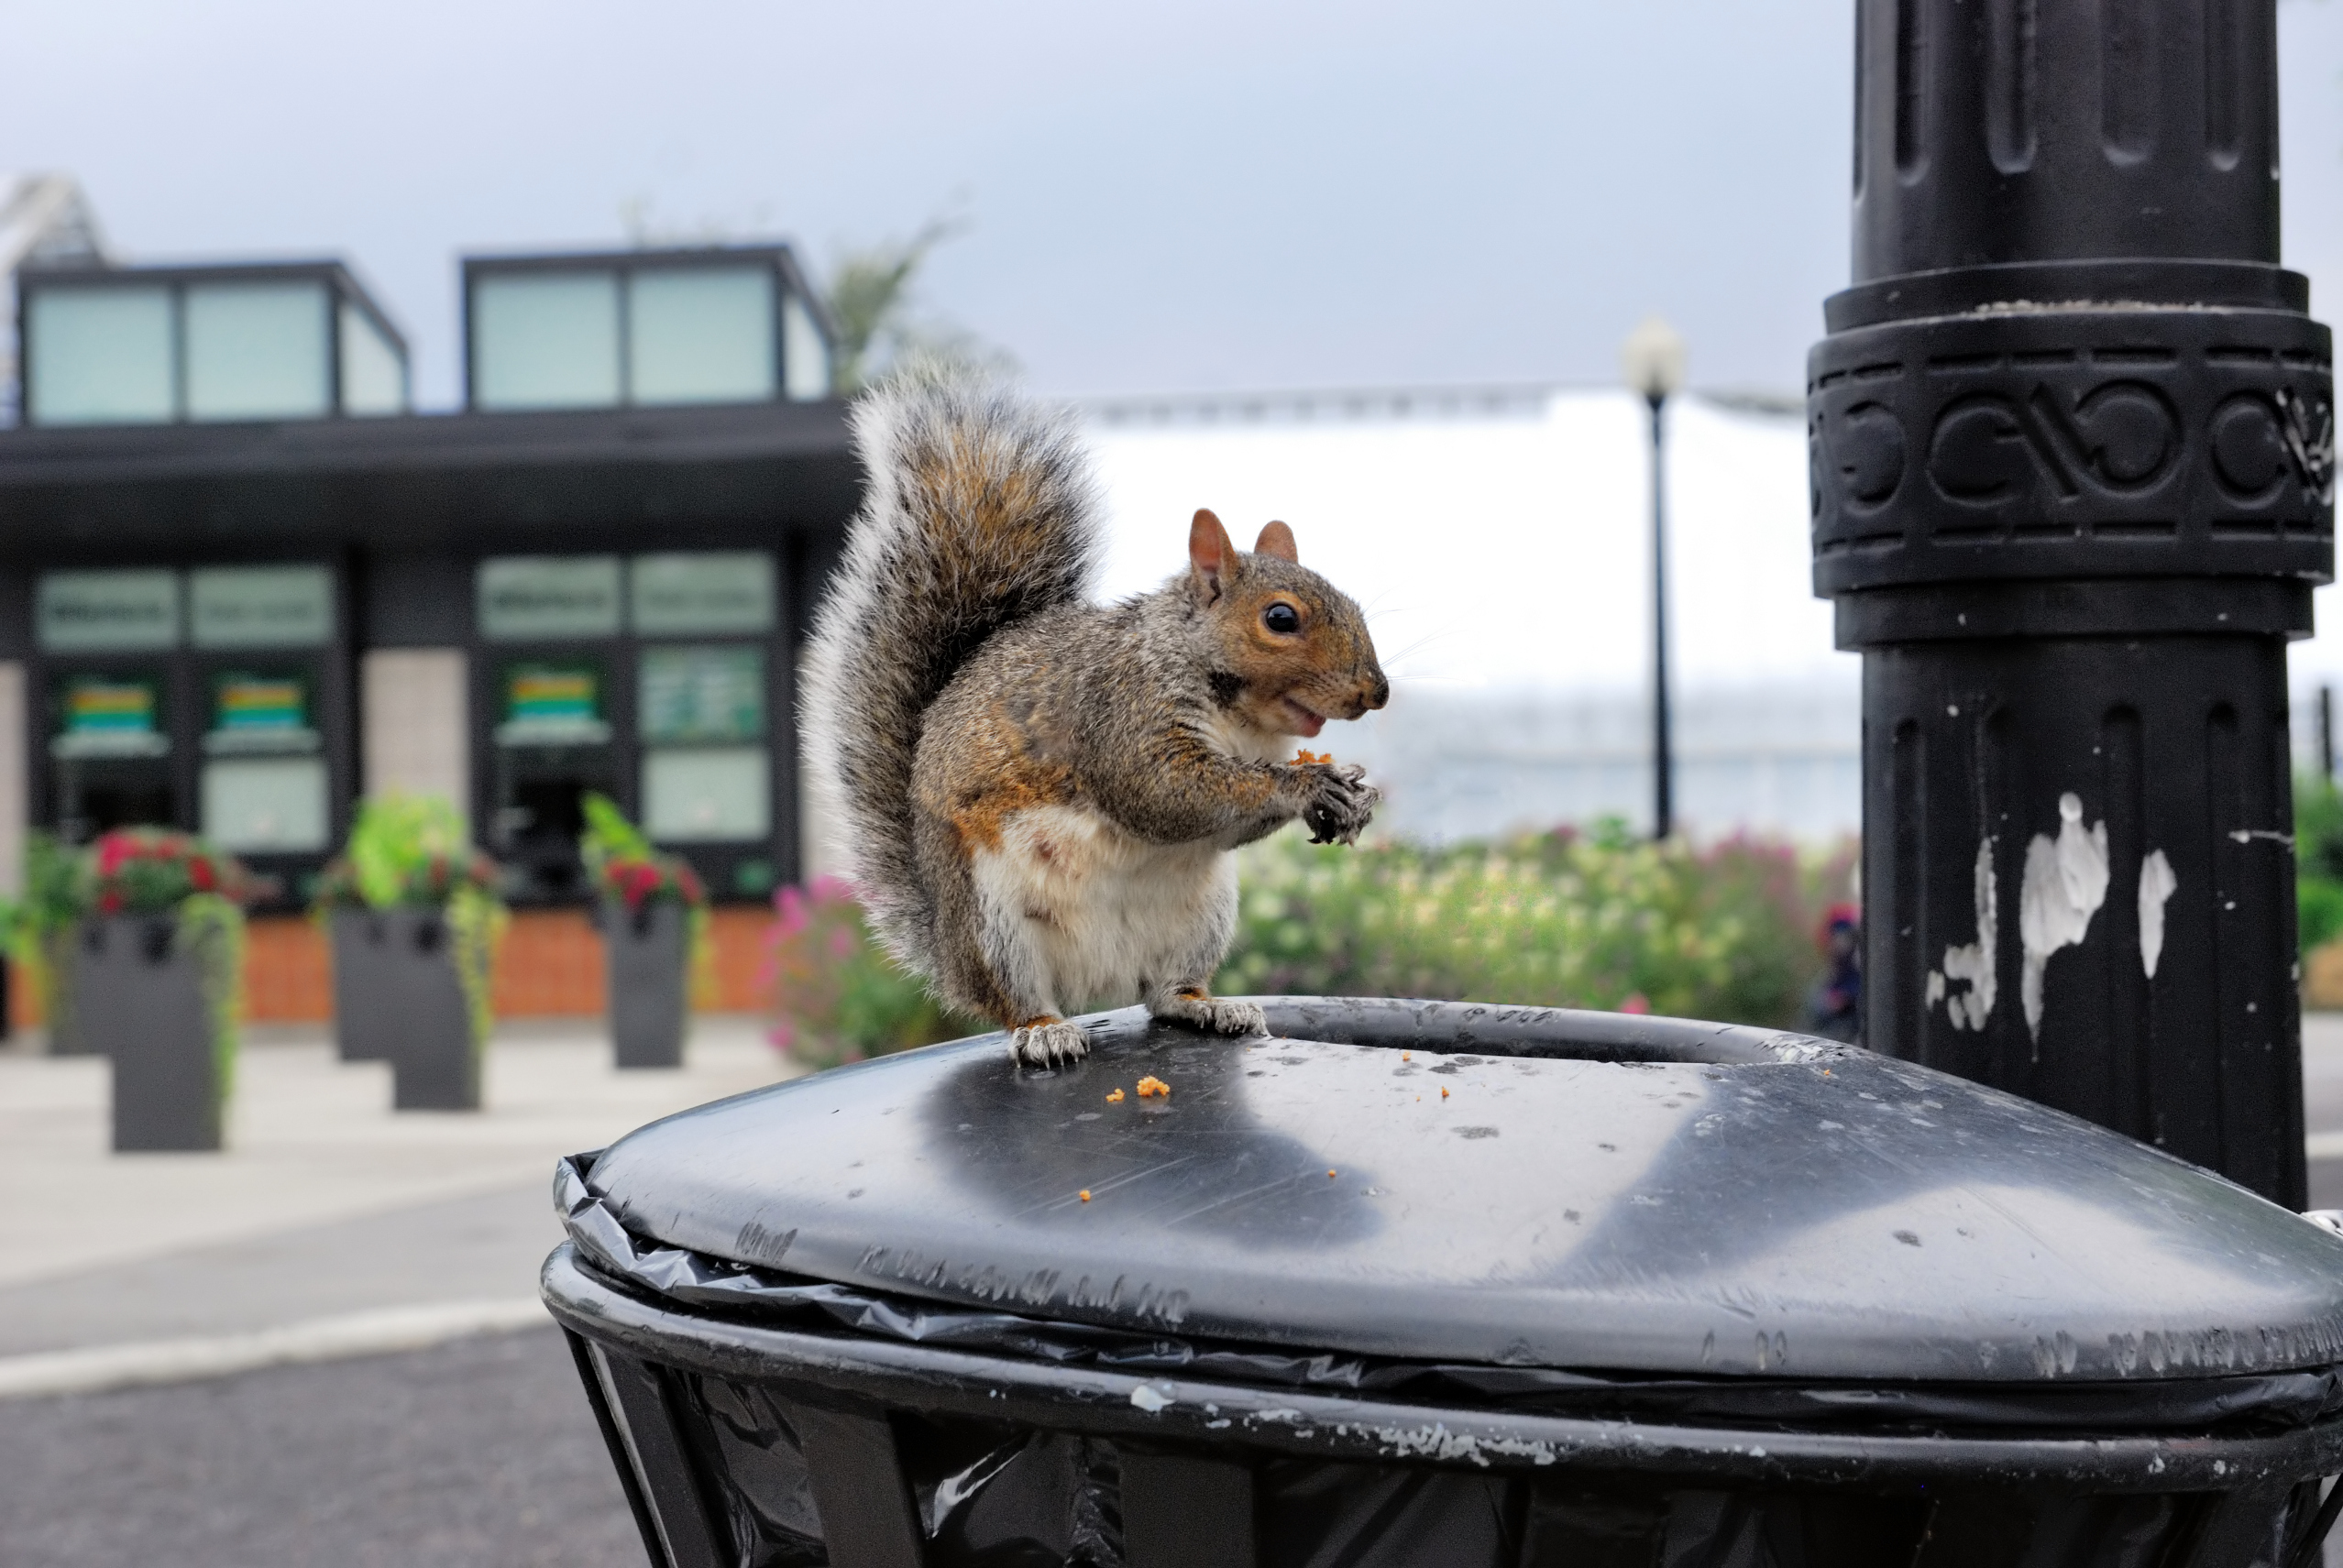 Urban_wildlife_-_squirrel